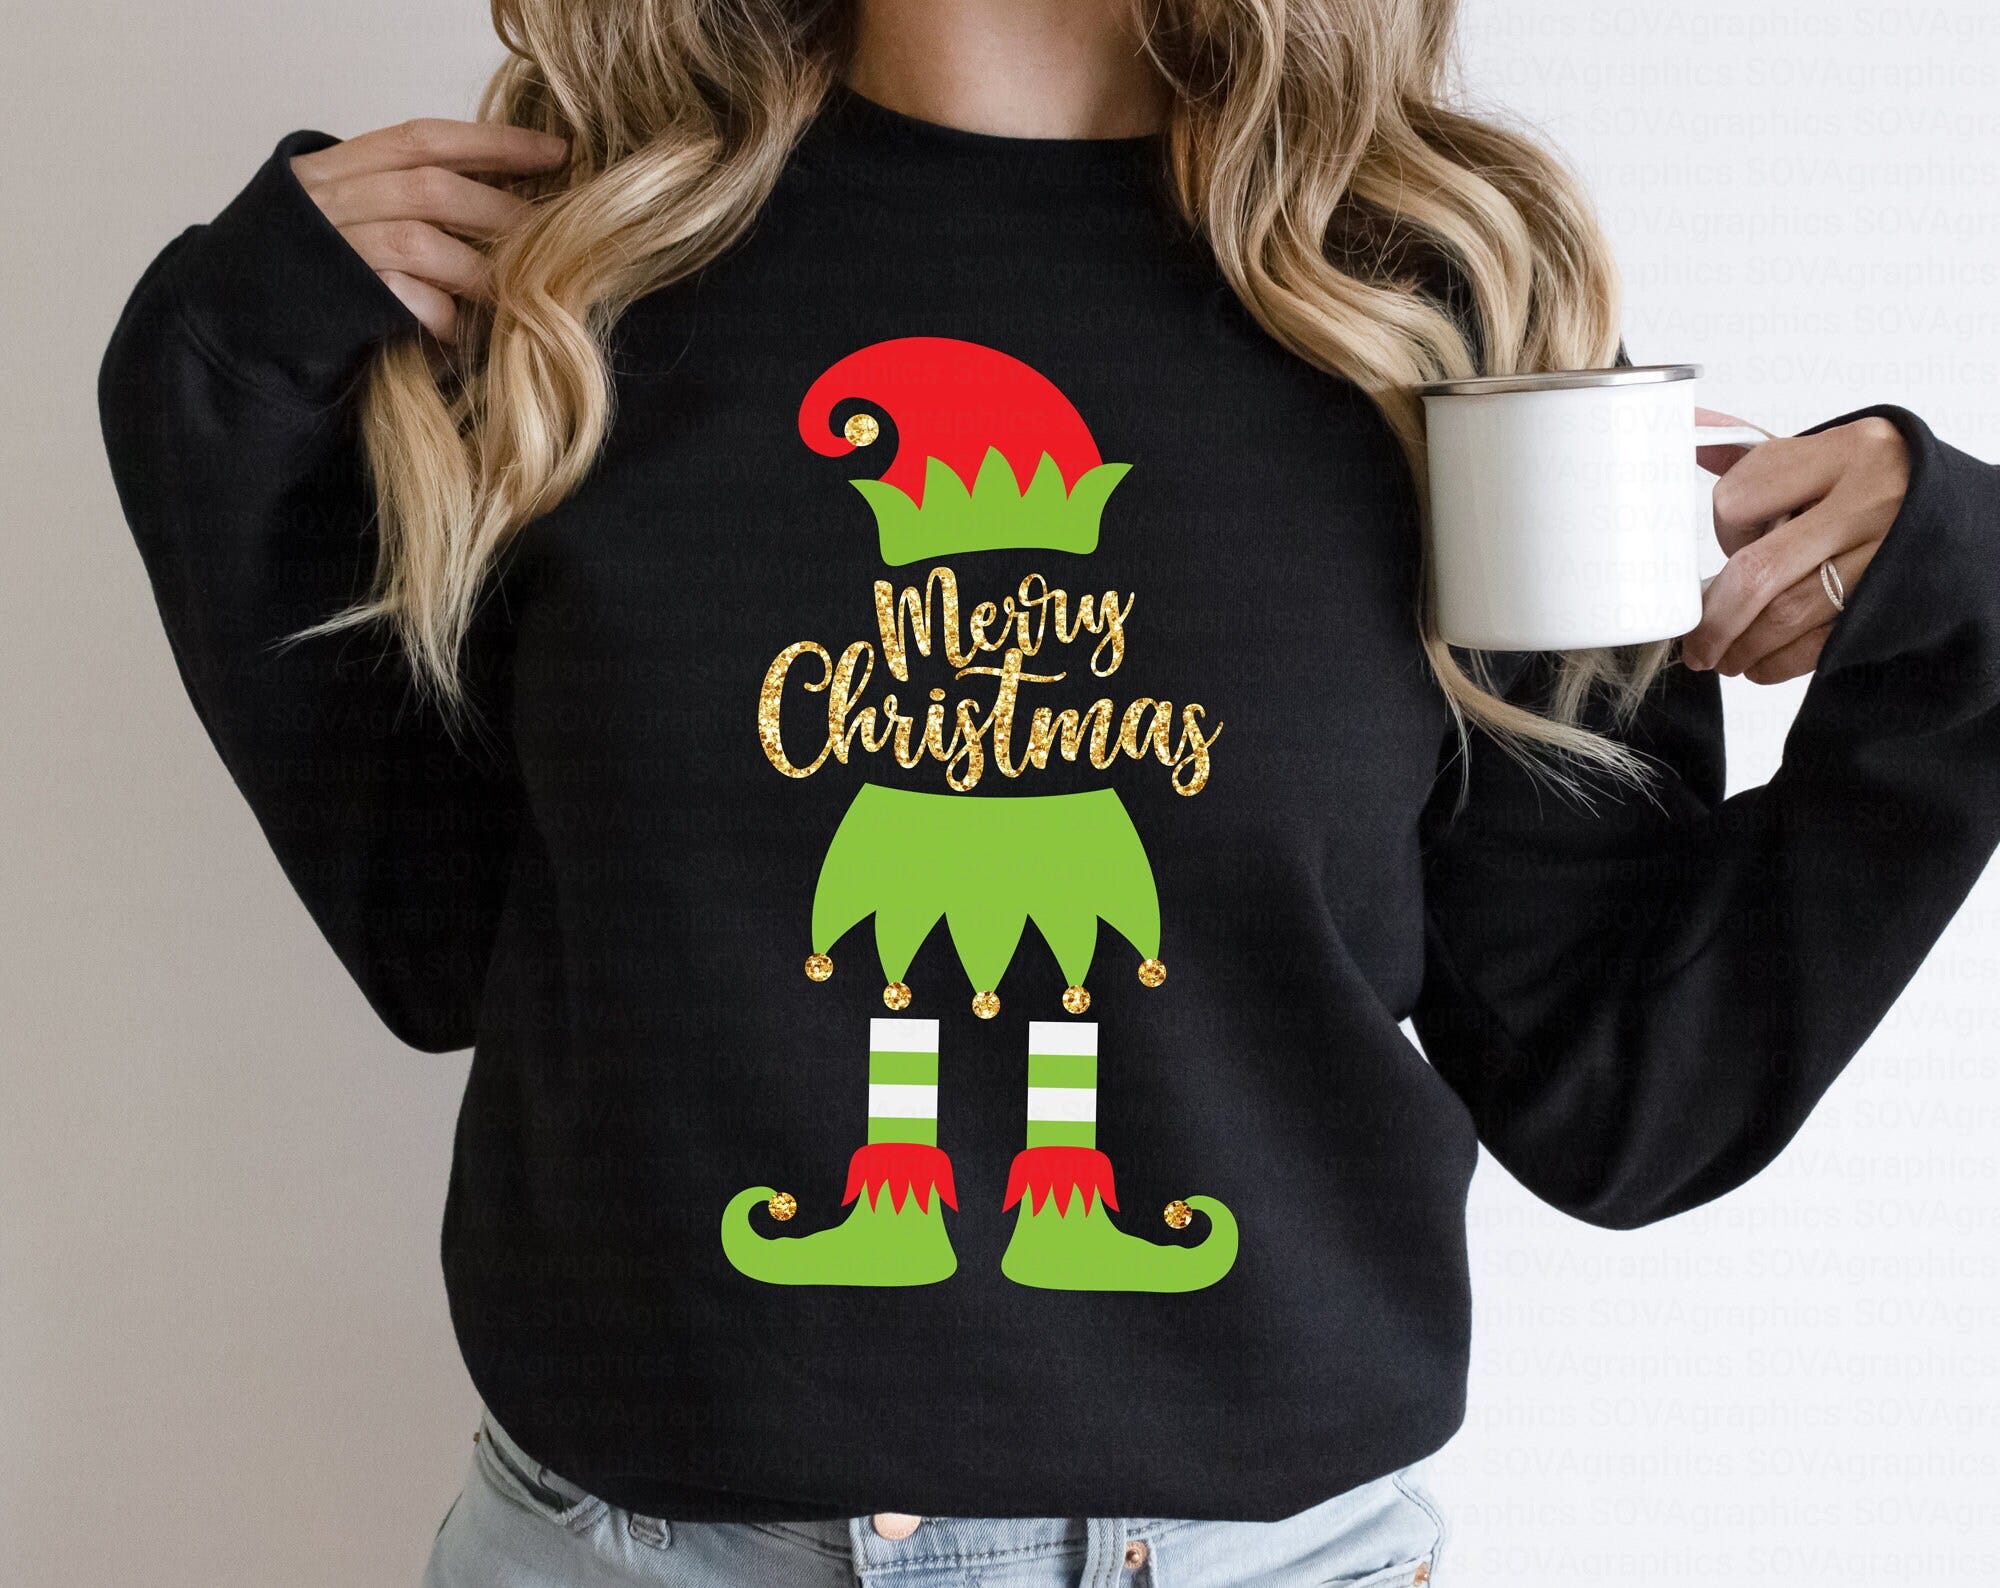 Elf svg, Elf Girl svg, Christmas svg, Merry Christmas svg, Elf Legs svg, Elf Hat svg, Christmas Shirt, Cut file, Clipart, Cricut, Silhouette